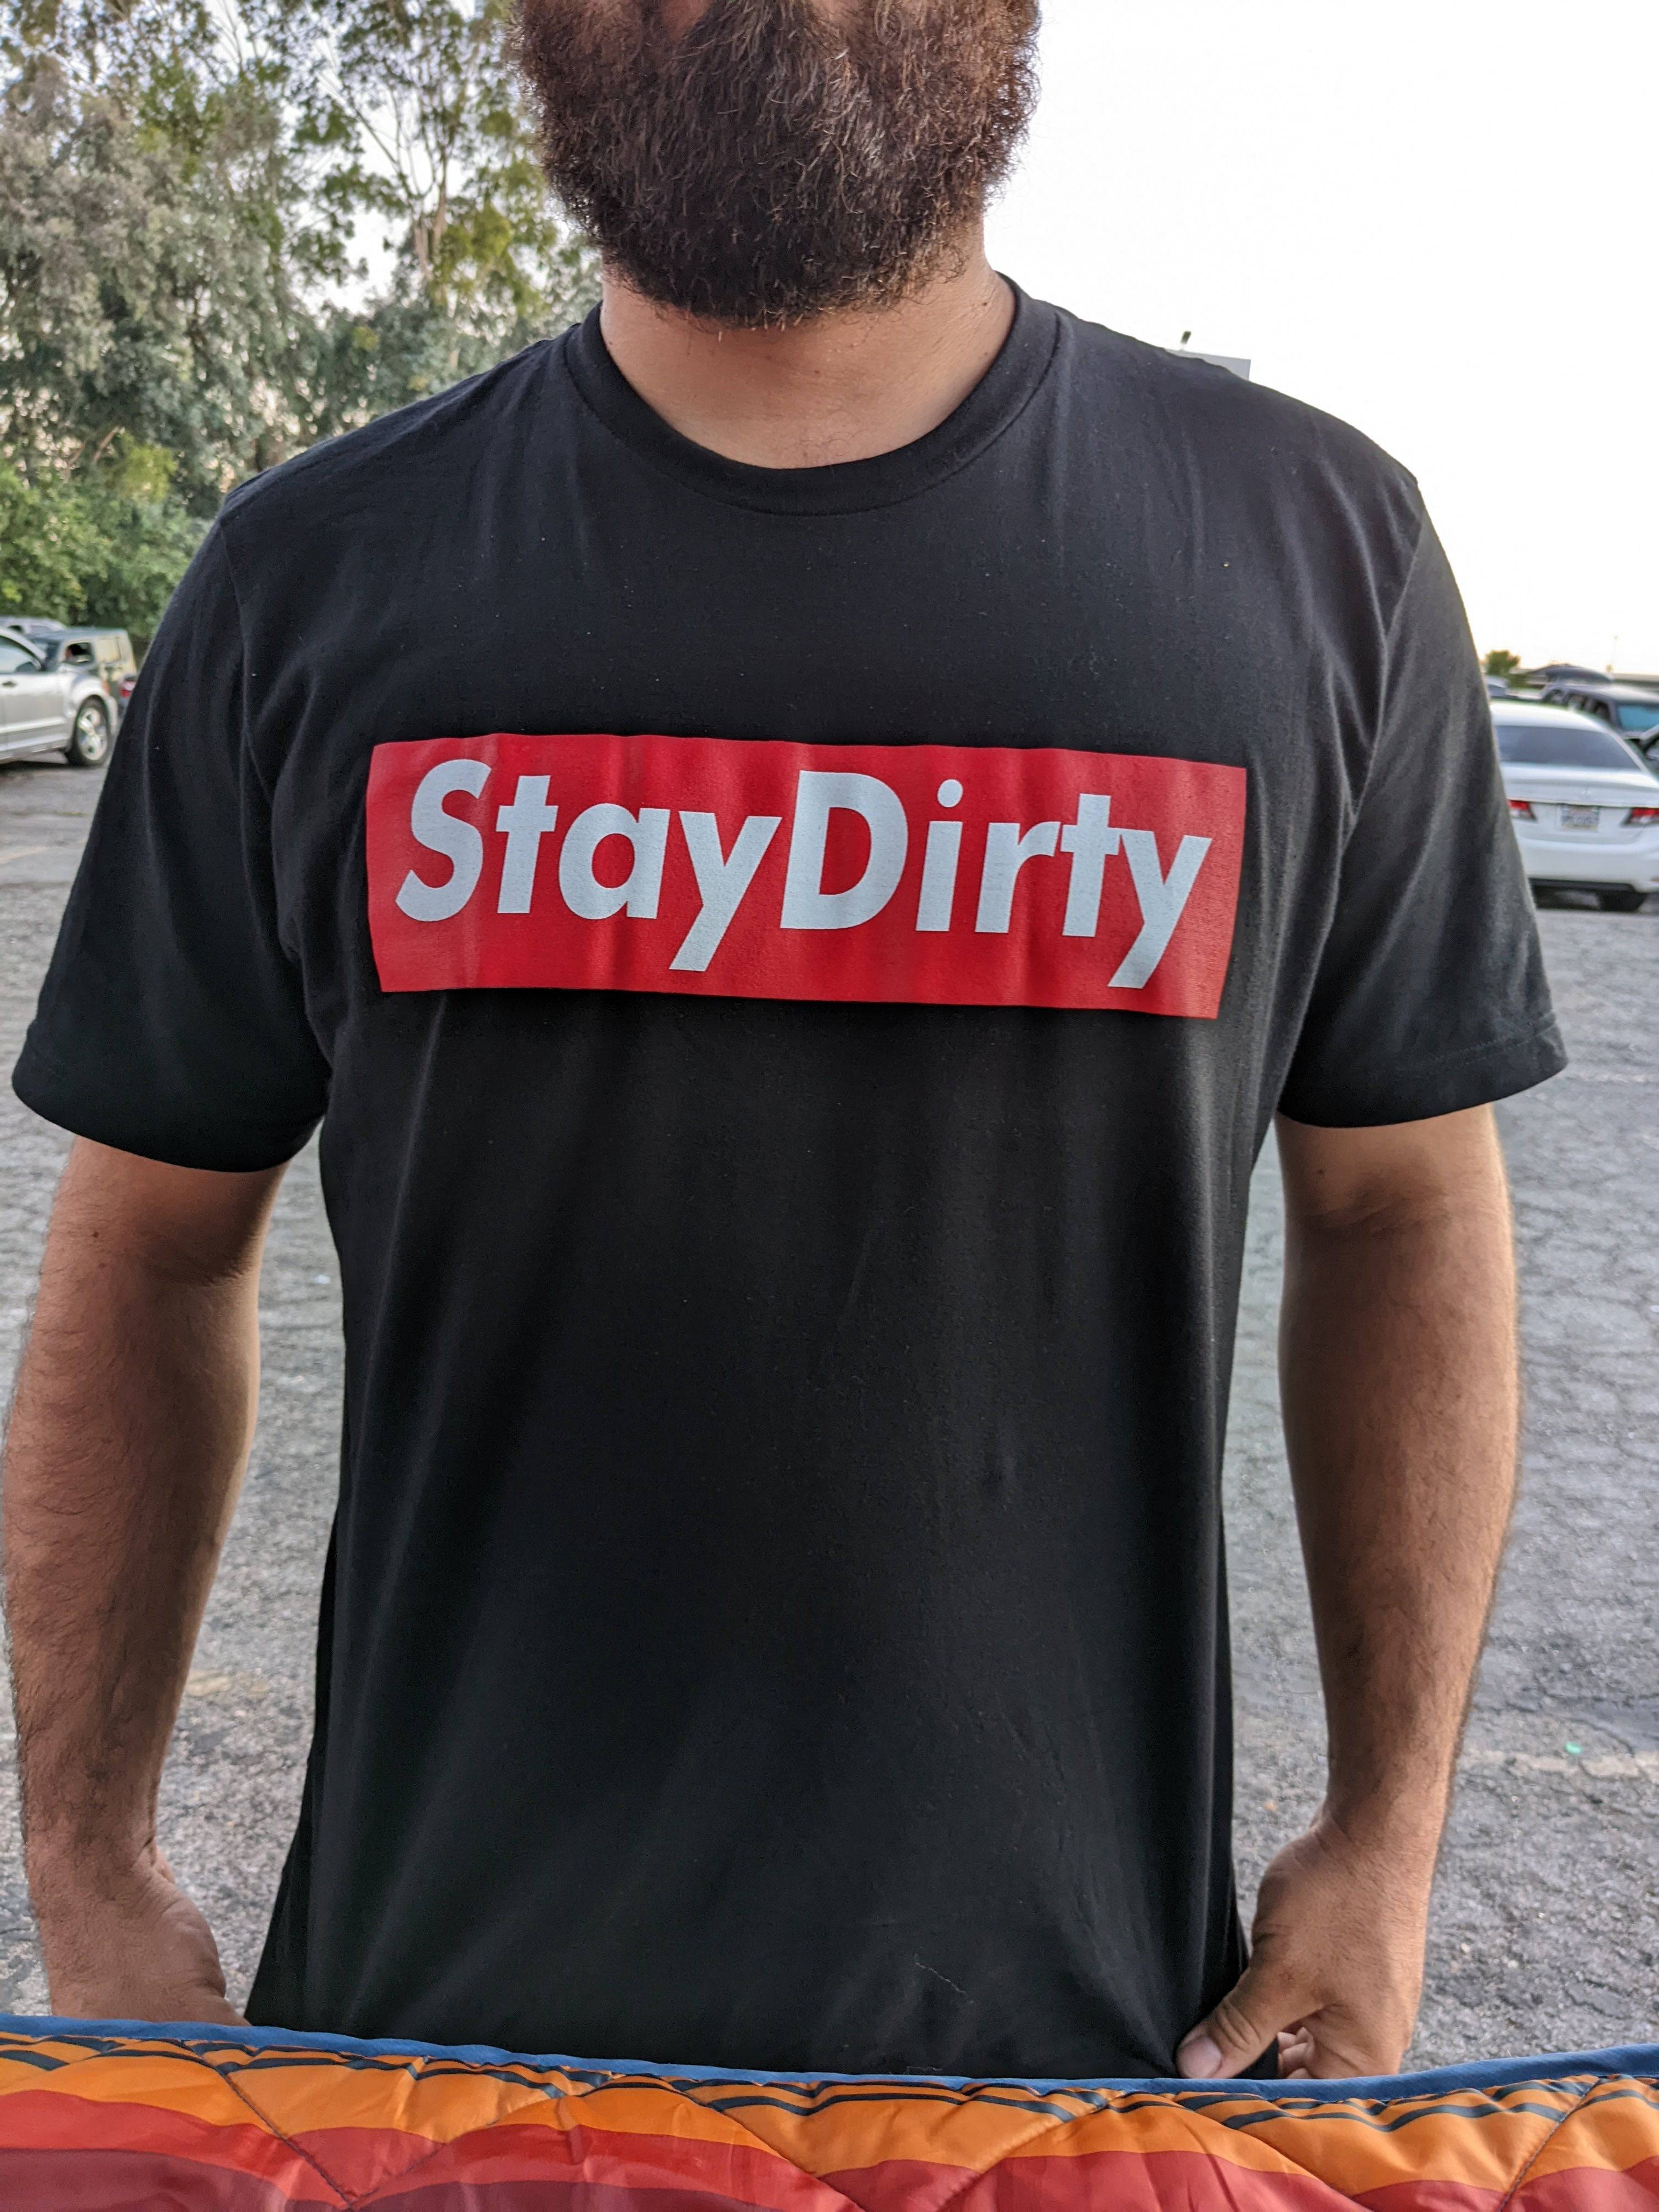 StayDirty T-Shirt - Black/Red - G Life UTV Shop Parts